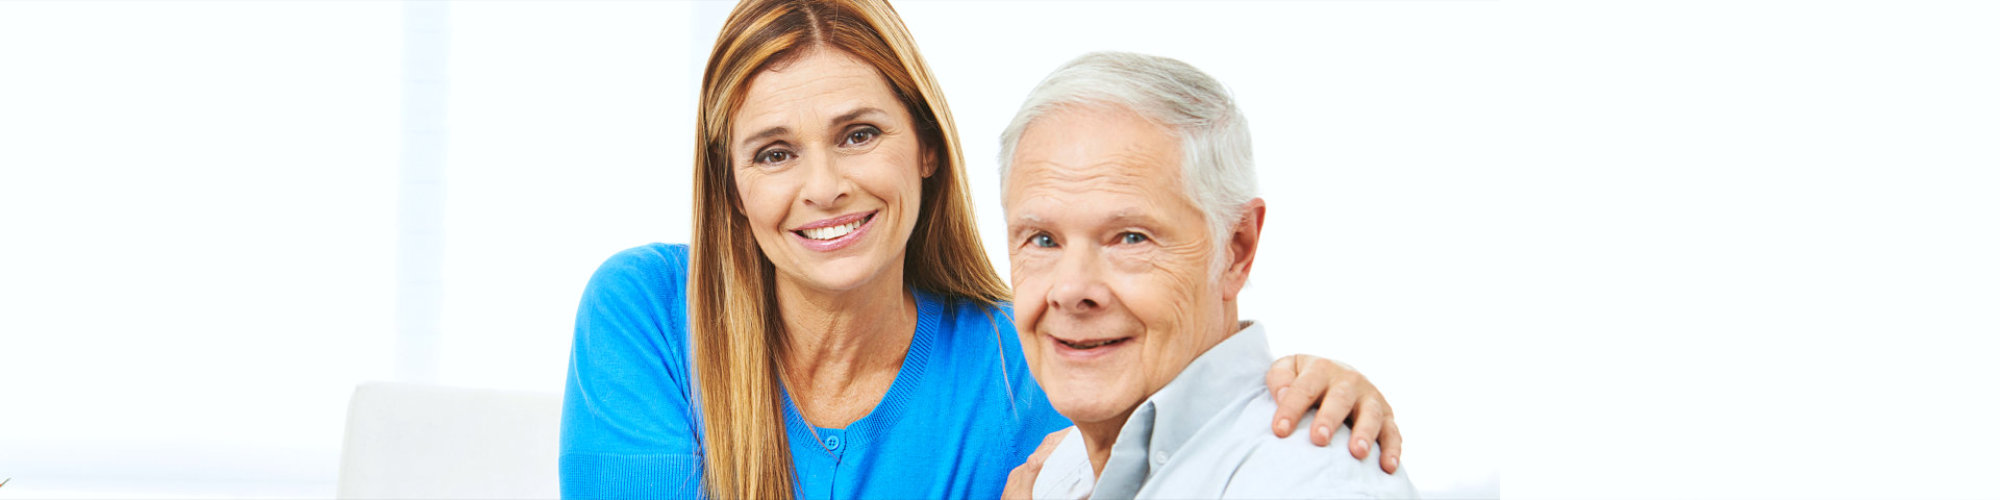 female caregiver and senior man smiling